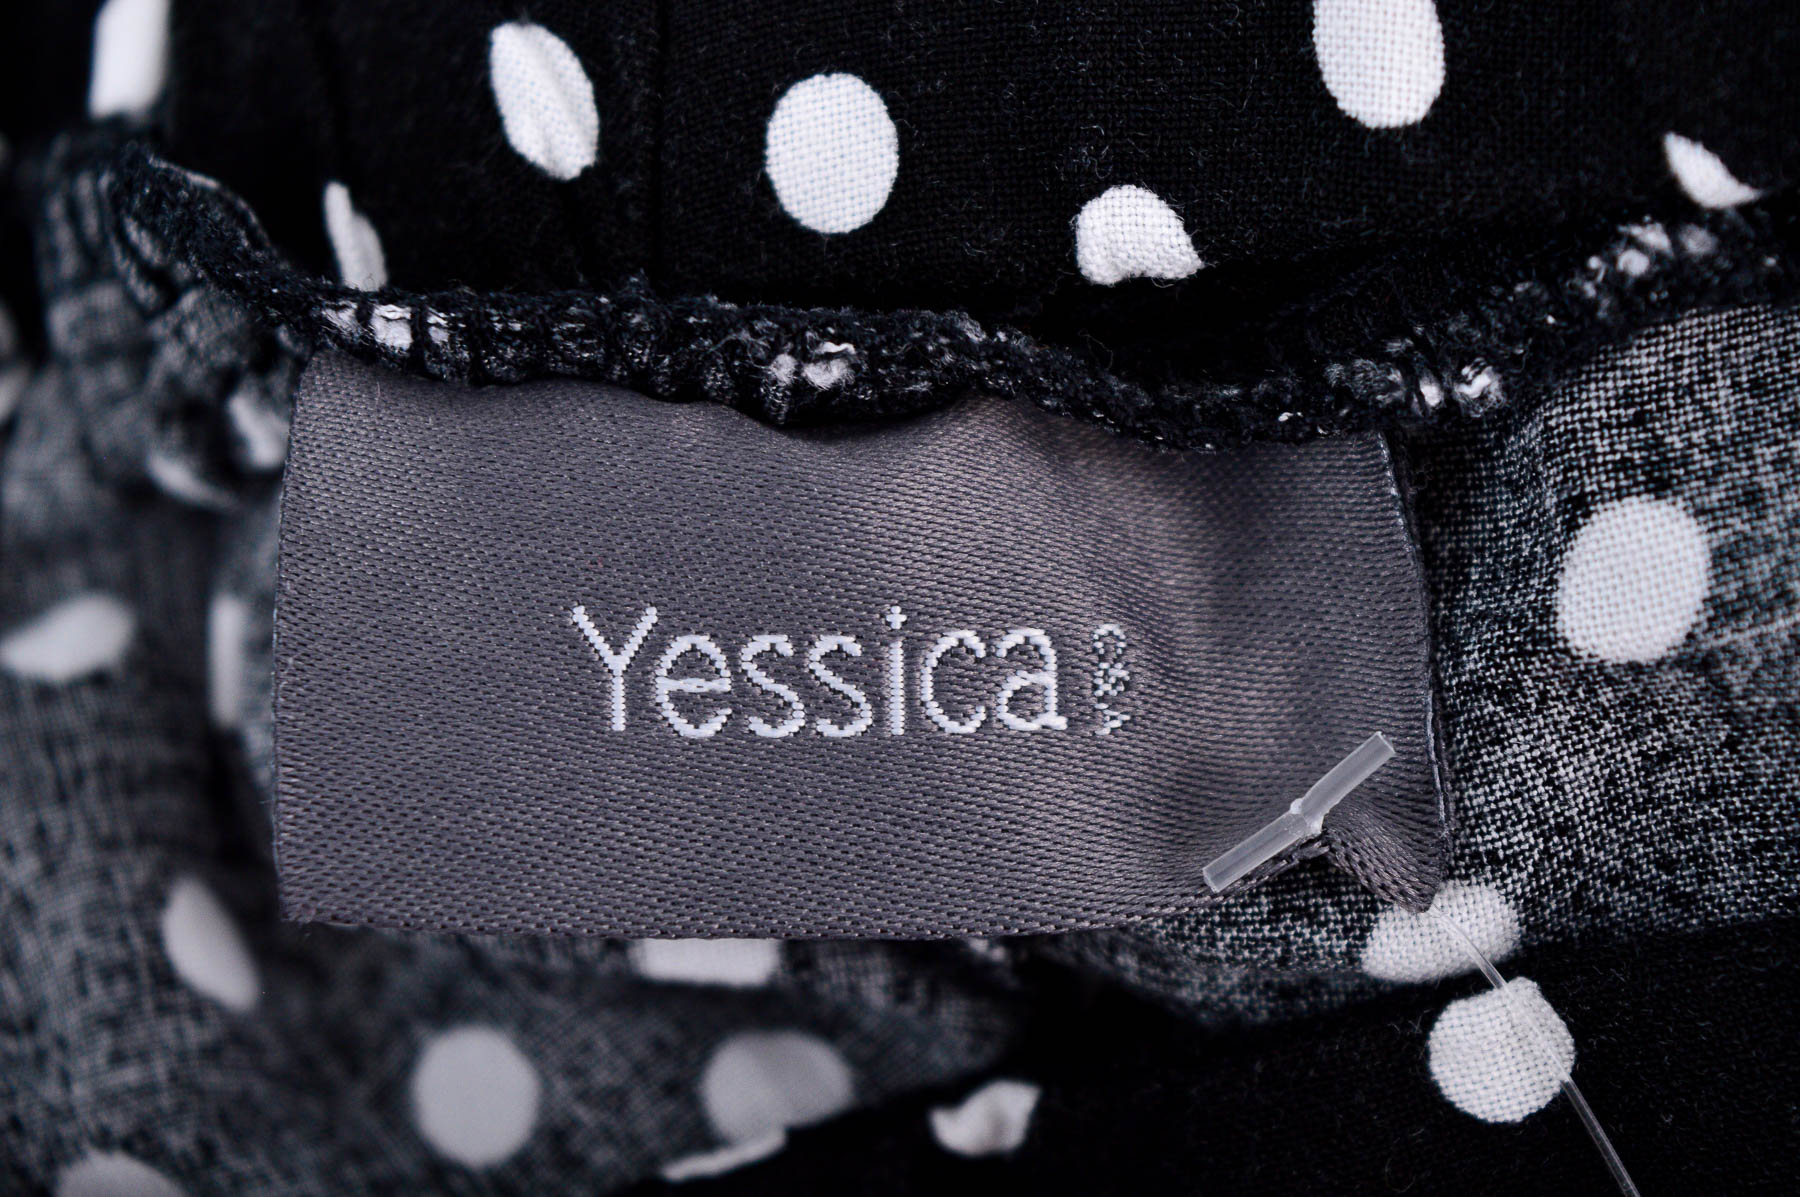 Female shorts - Yessica - 2